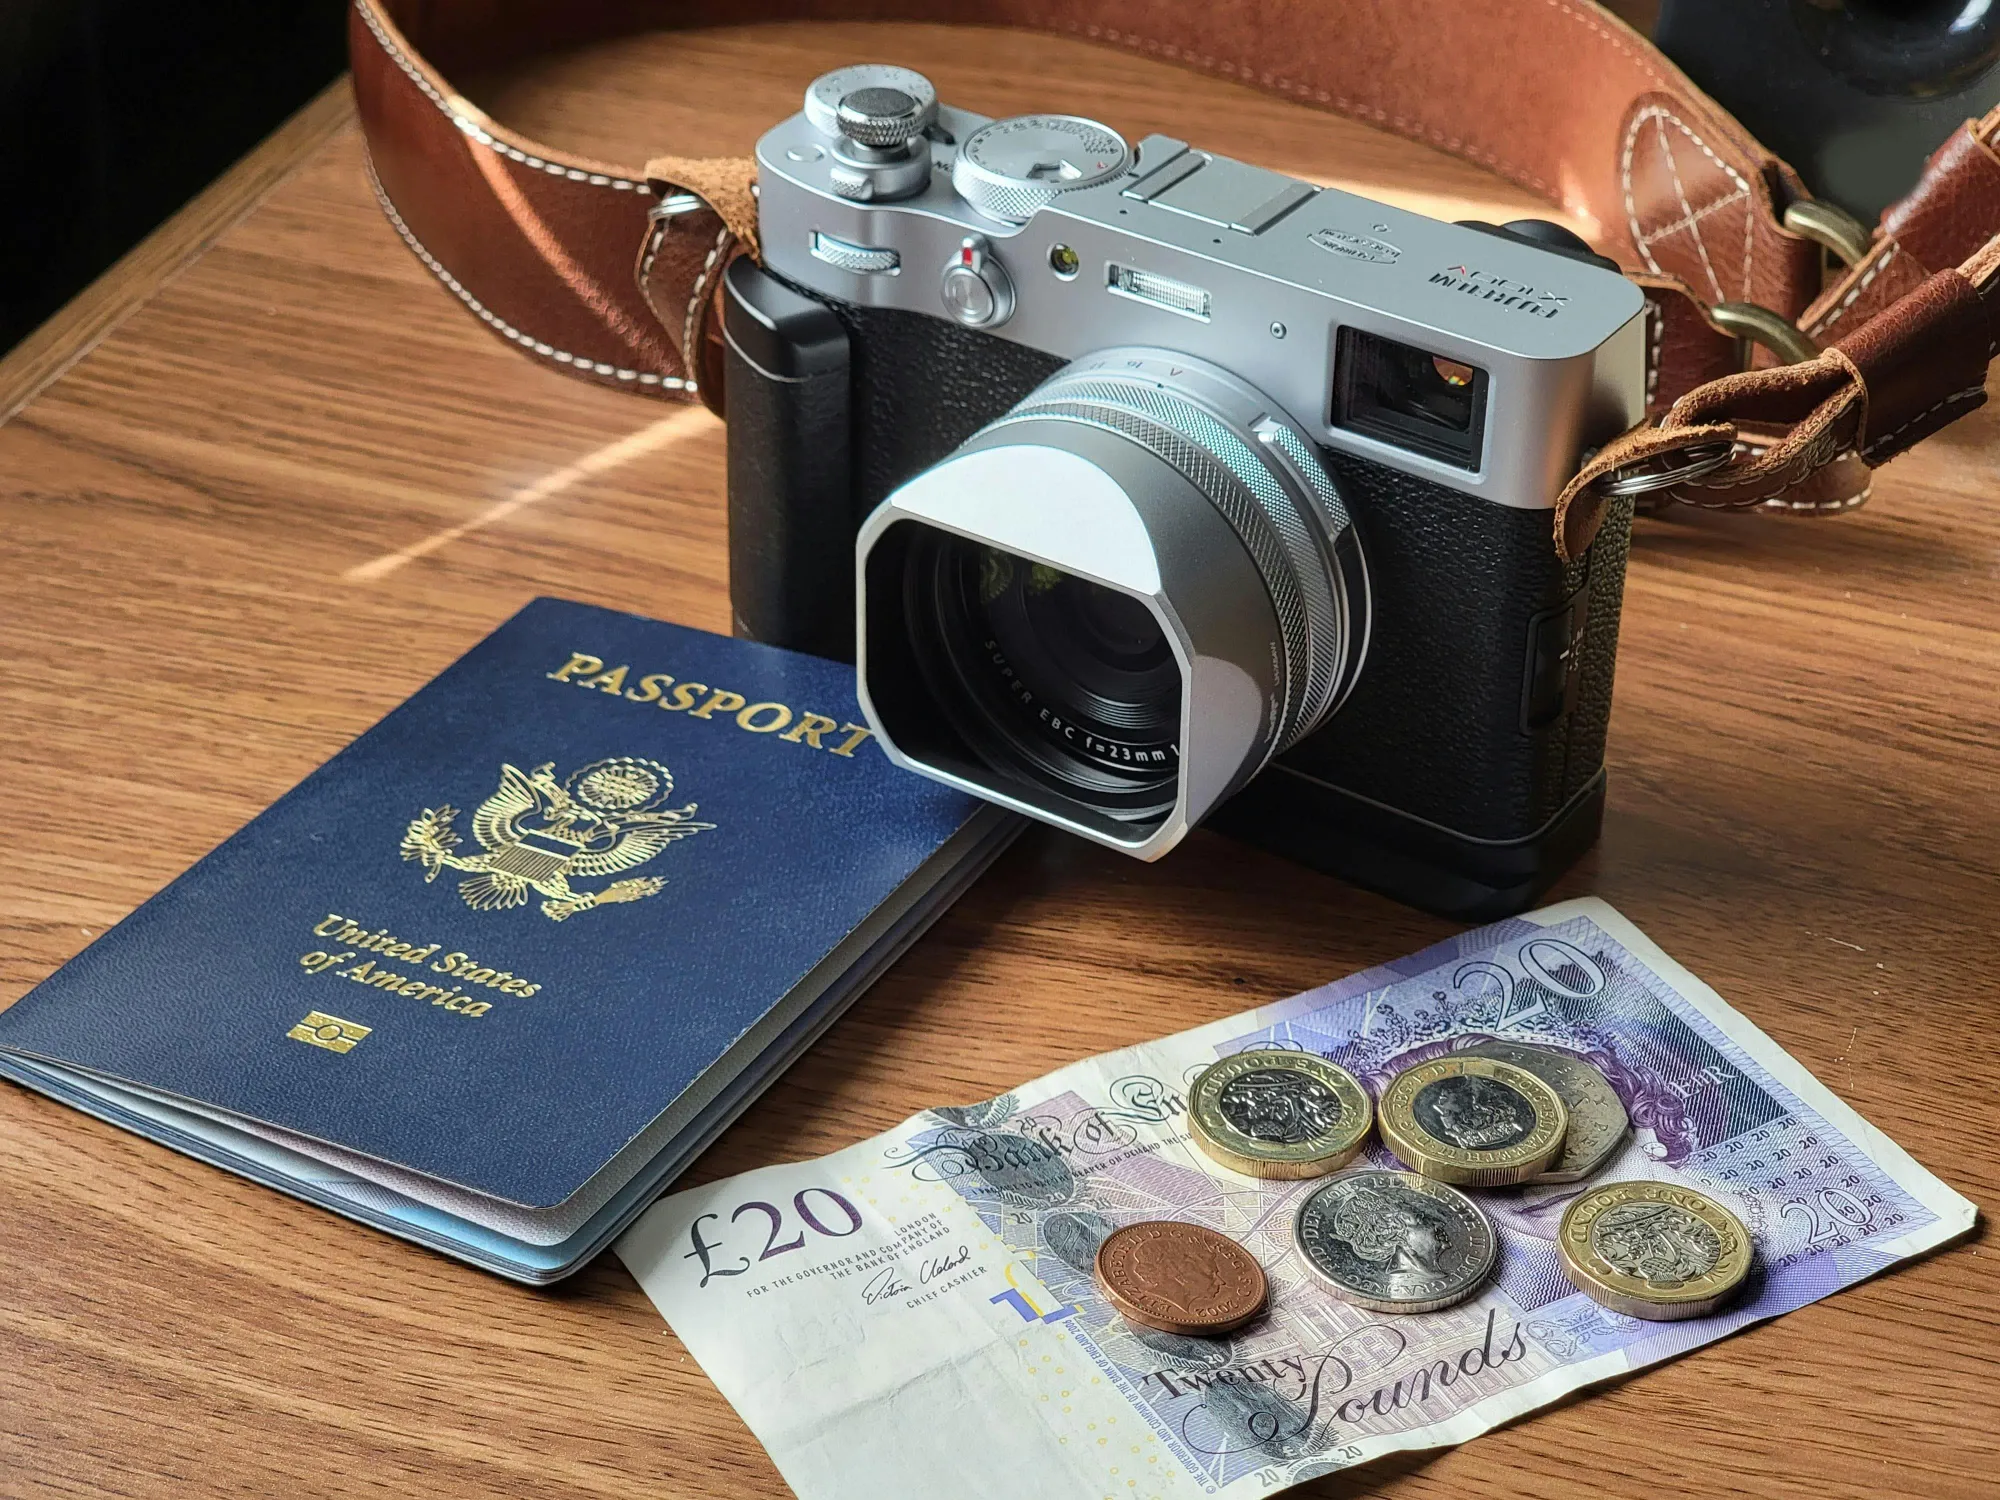 Passport, money, and camera